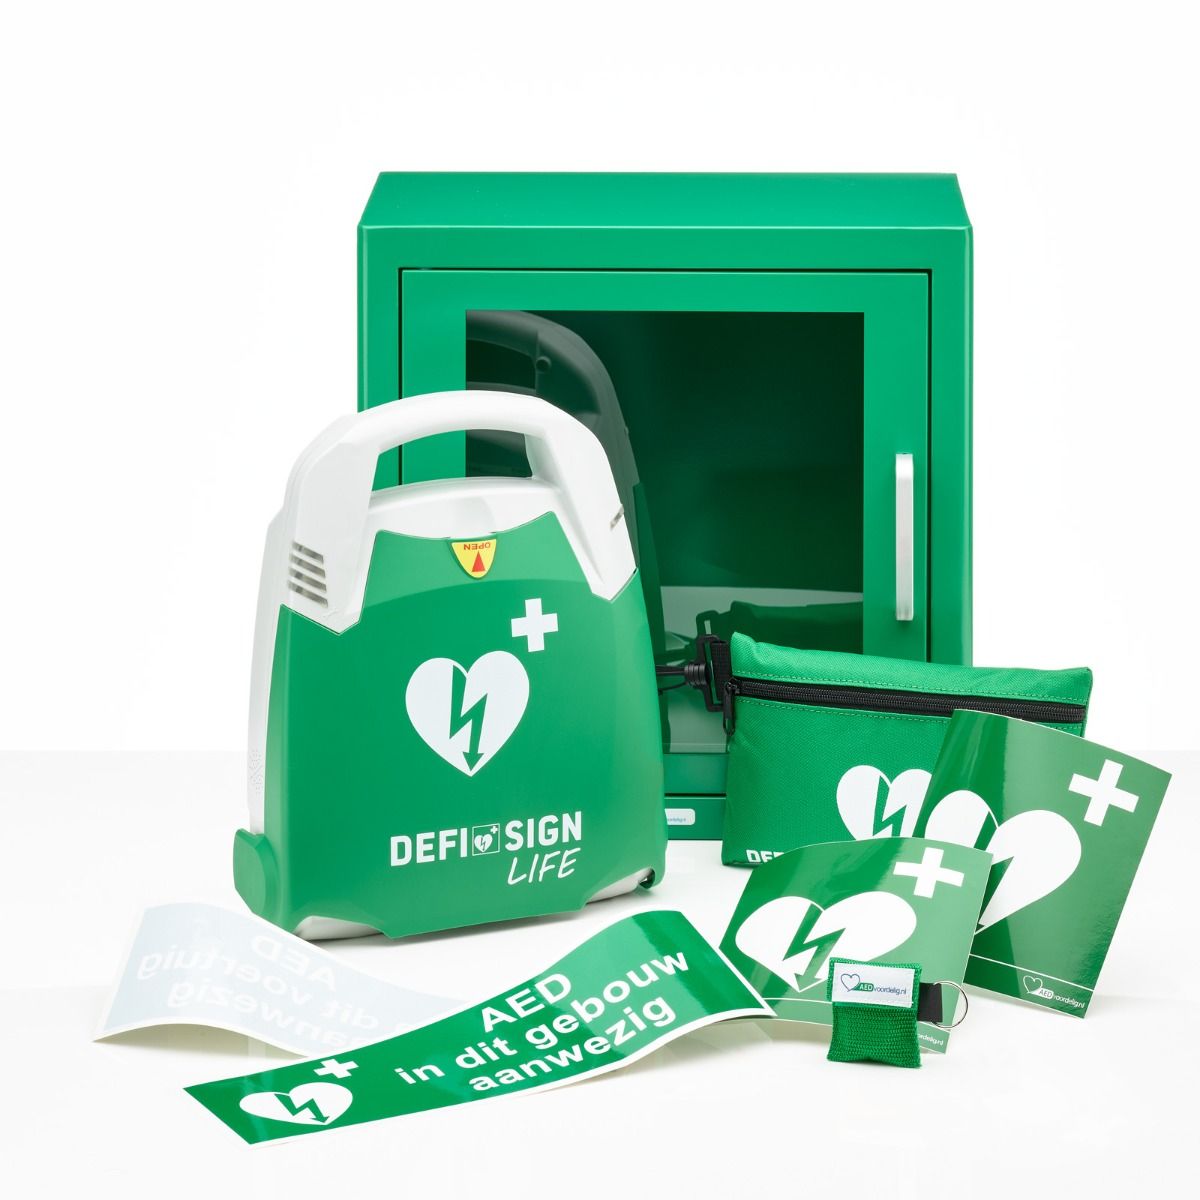 DefiSign Life AED + binnenkast-Groen-Volautomaat-NL/ENG/DE